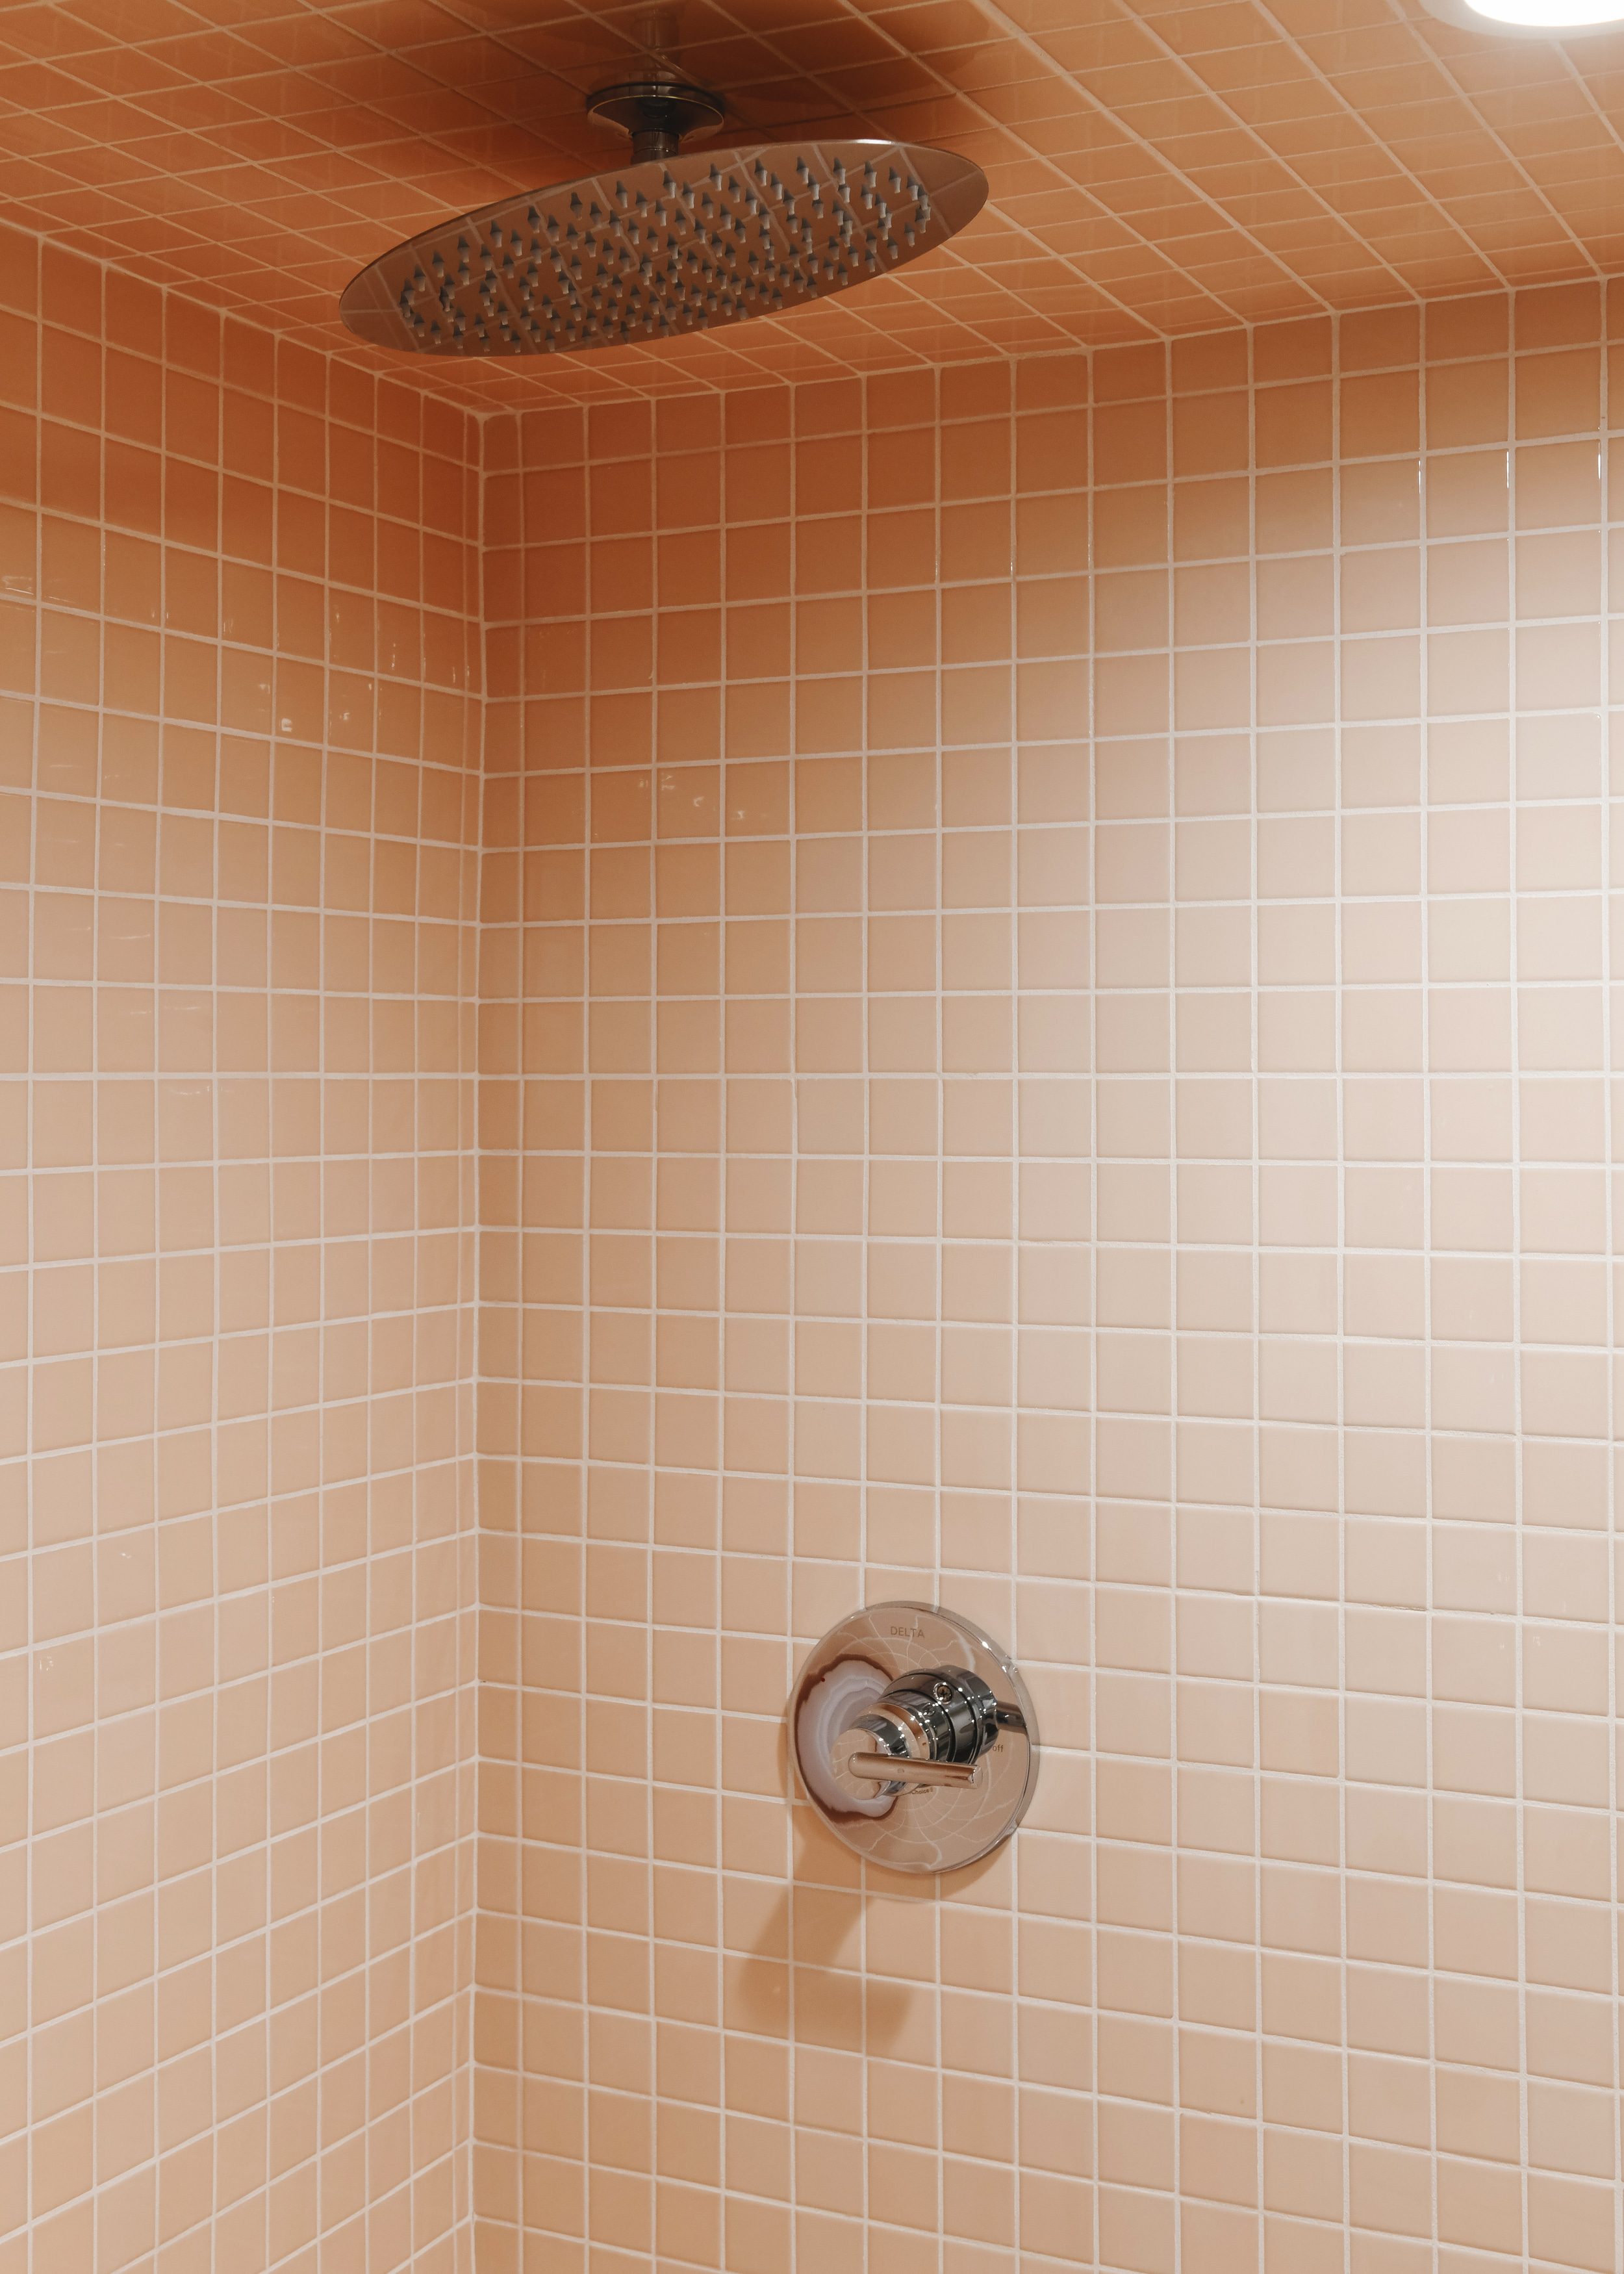 rain shower head, chrome trim kit and blush mosaic tile | Two Flat den bathroom before + after! | via Yellow Brick Home